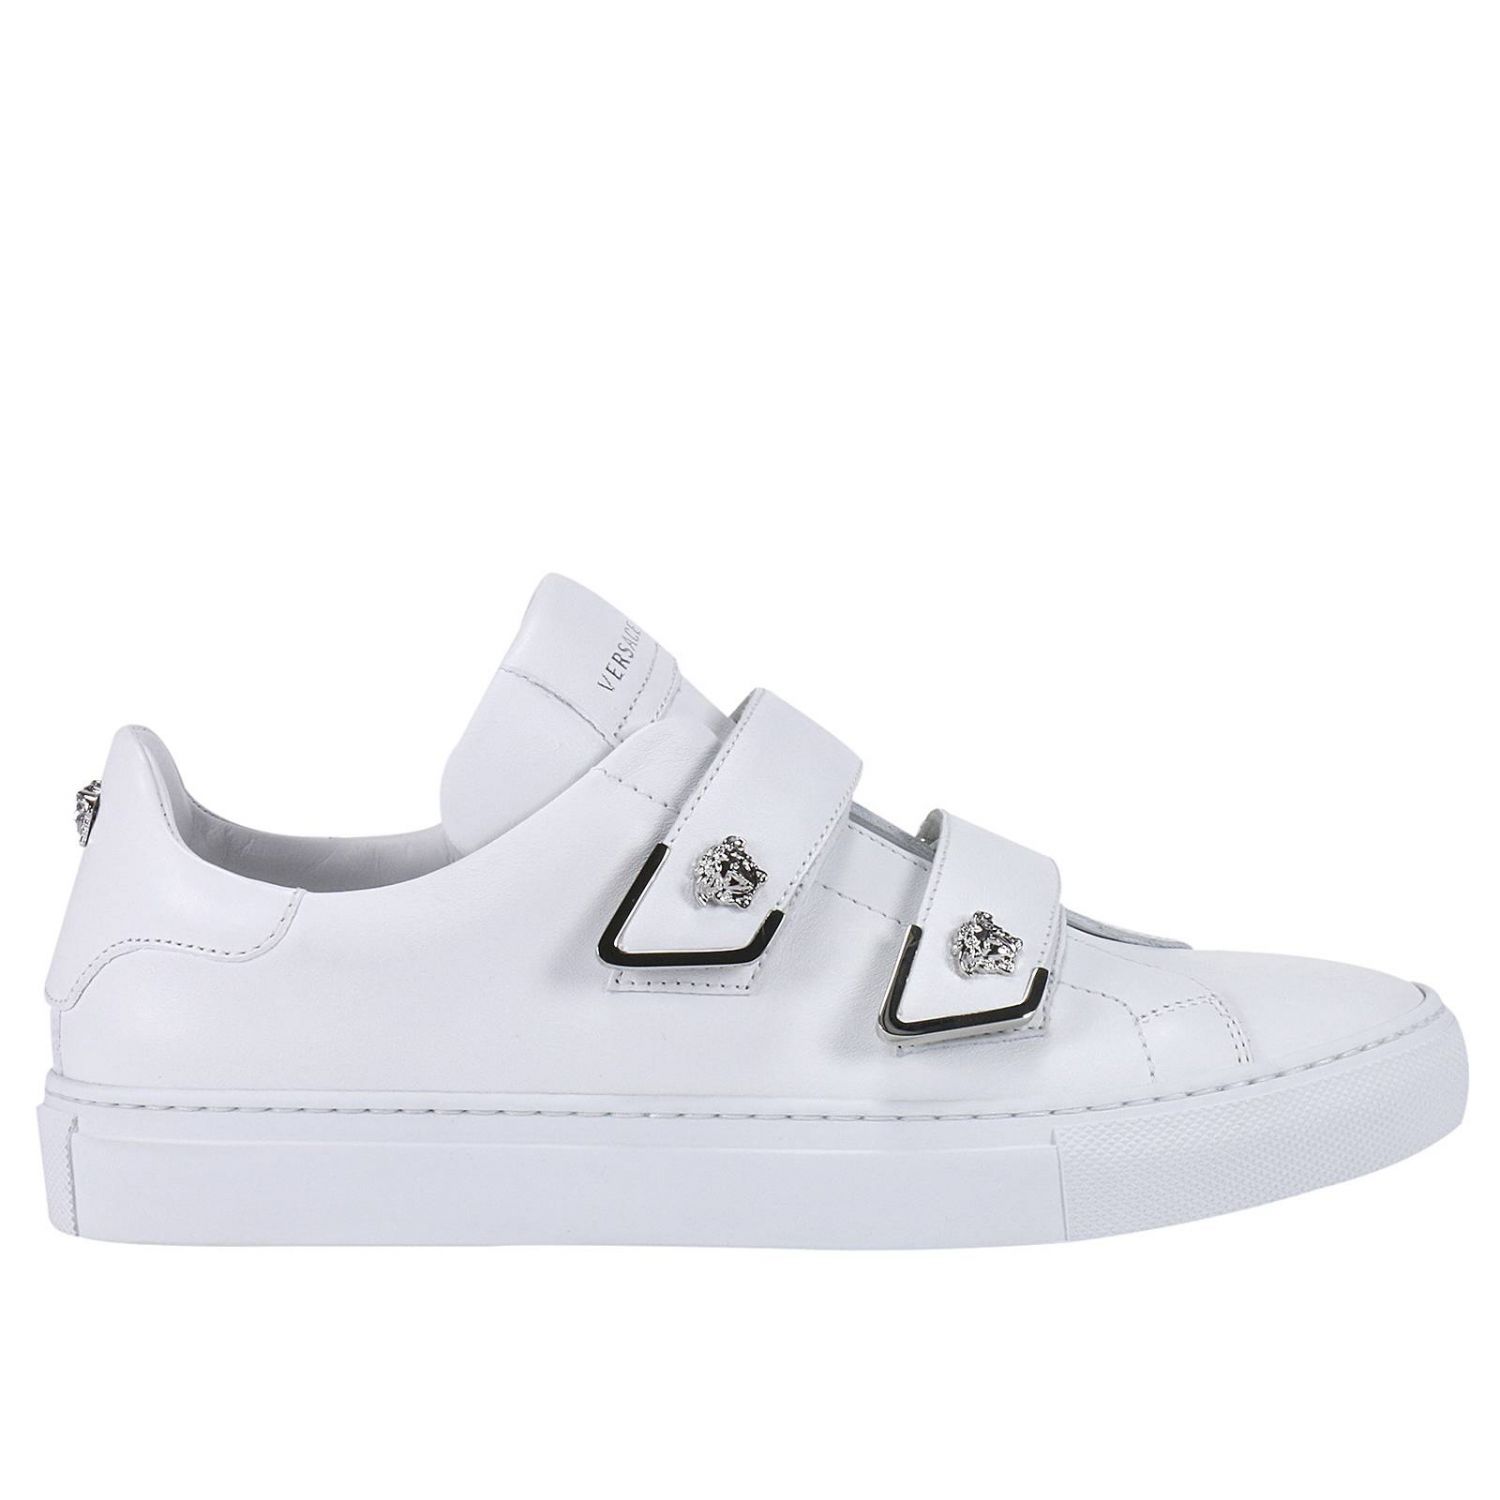 Versace Outlet: Shoes women - White | Sneakers Versace DSR442D DVTOP ...